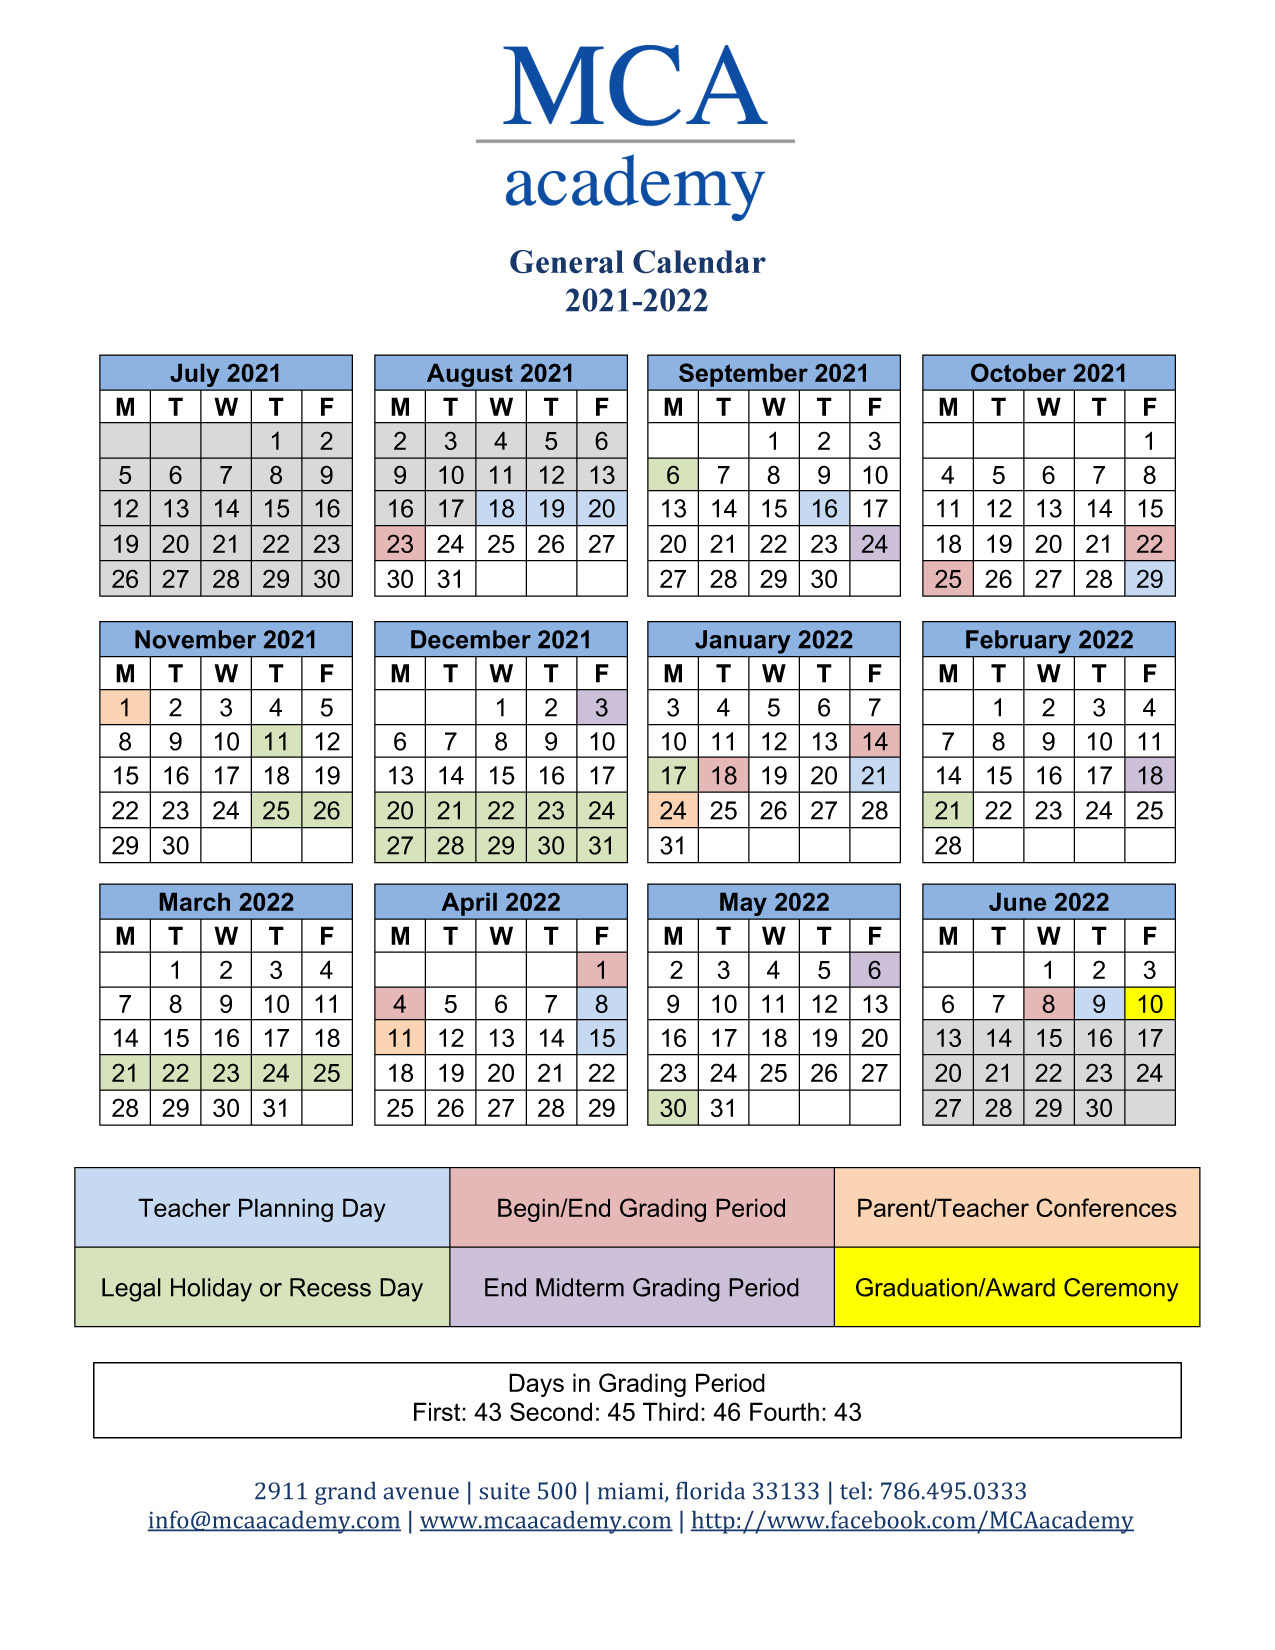 Mdcps 2022 Calendar School Calendar 2021-2022 - Mca Academy